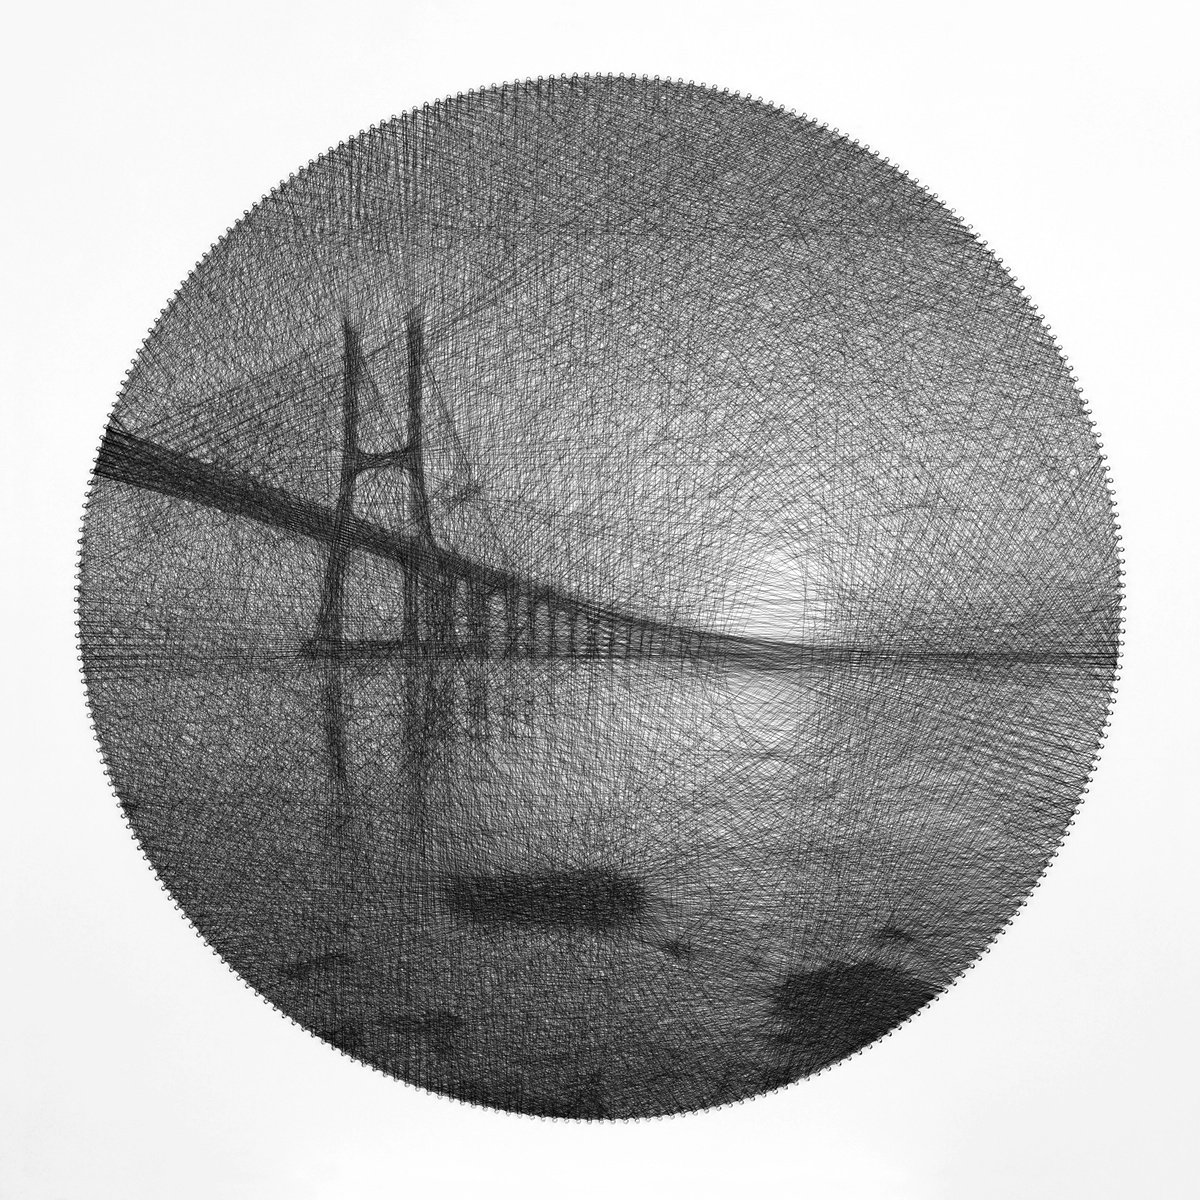 Bridge, string artwork by Andrey Saharov